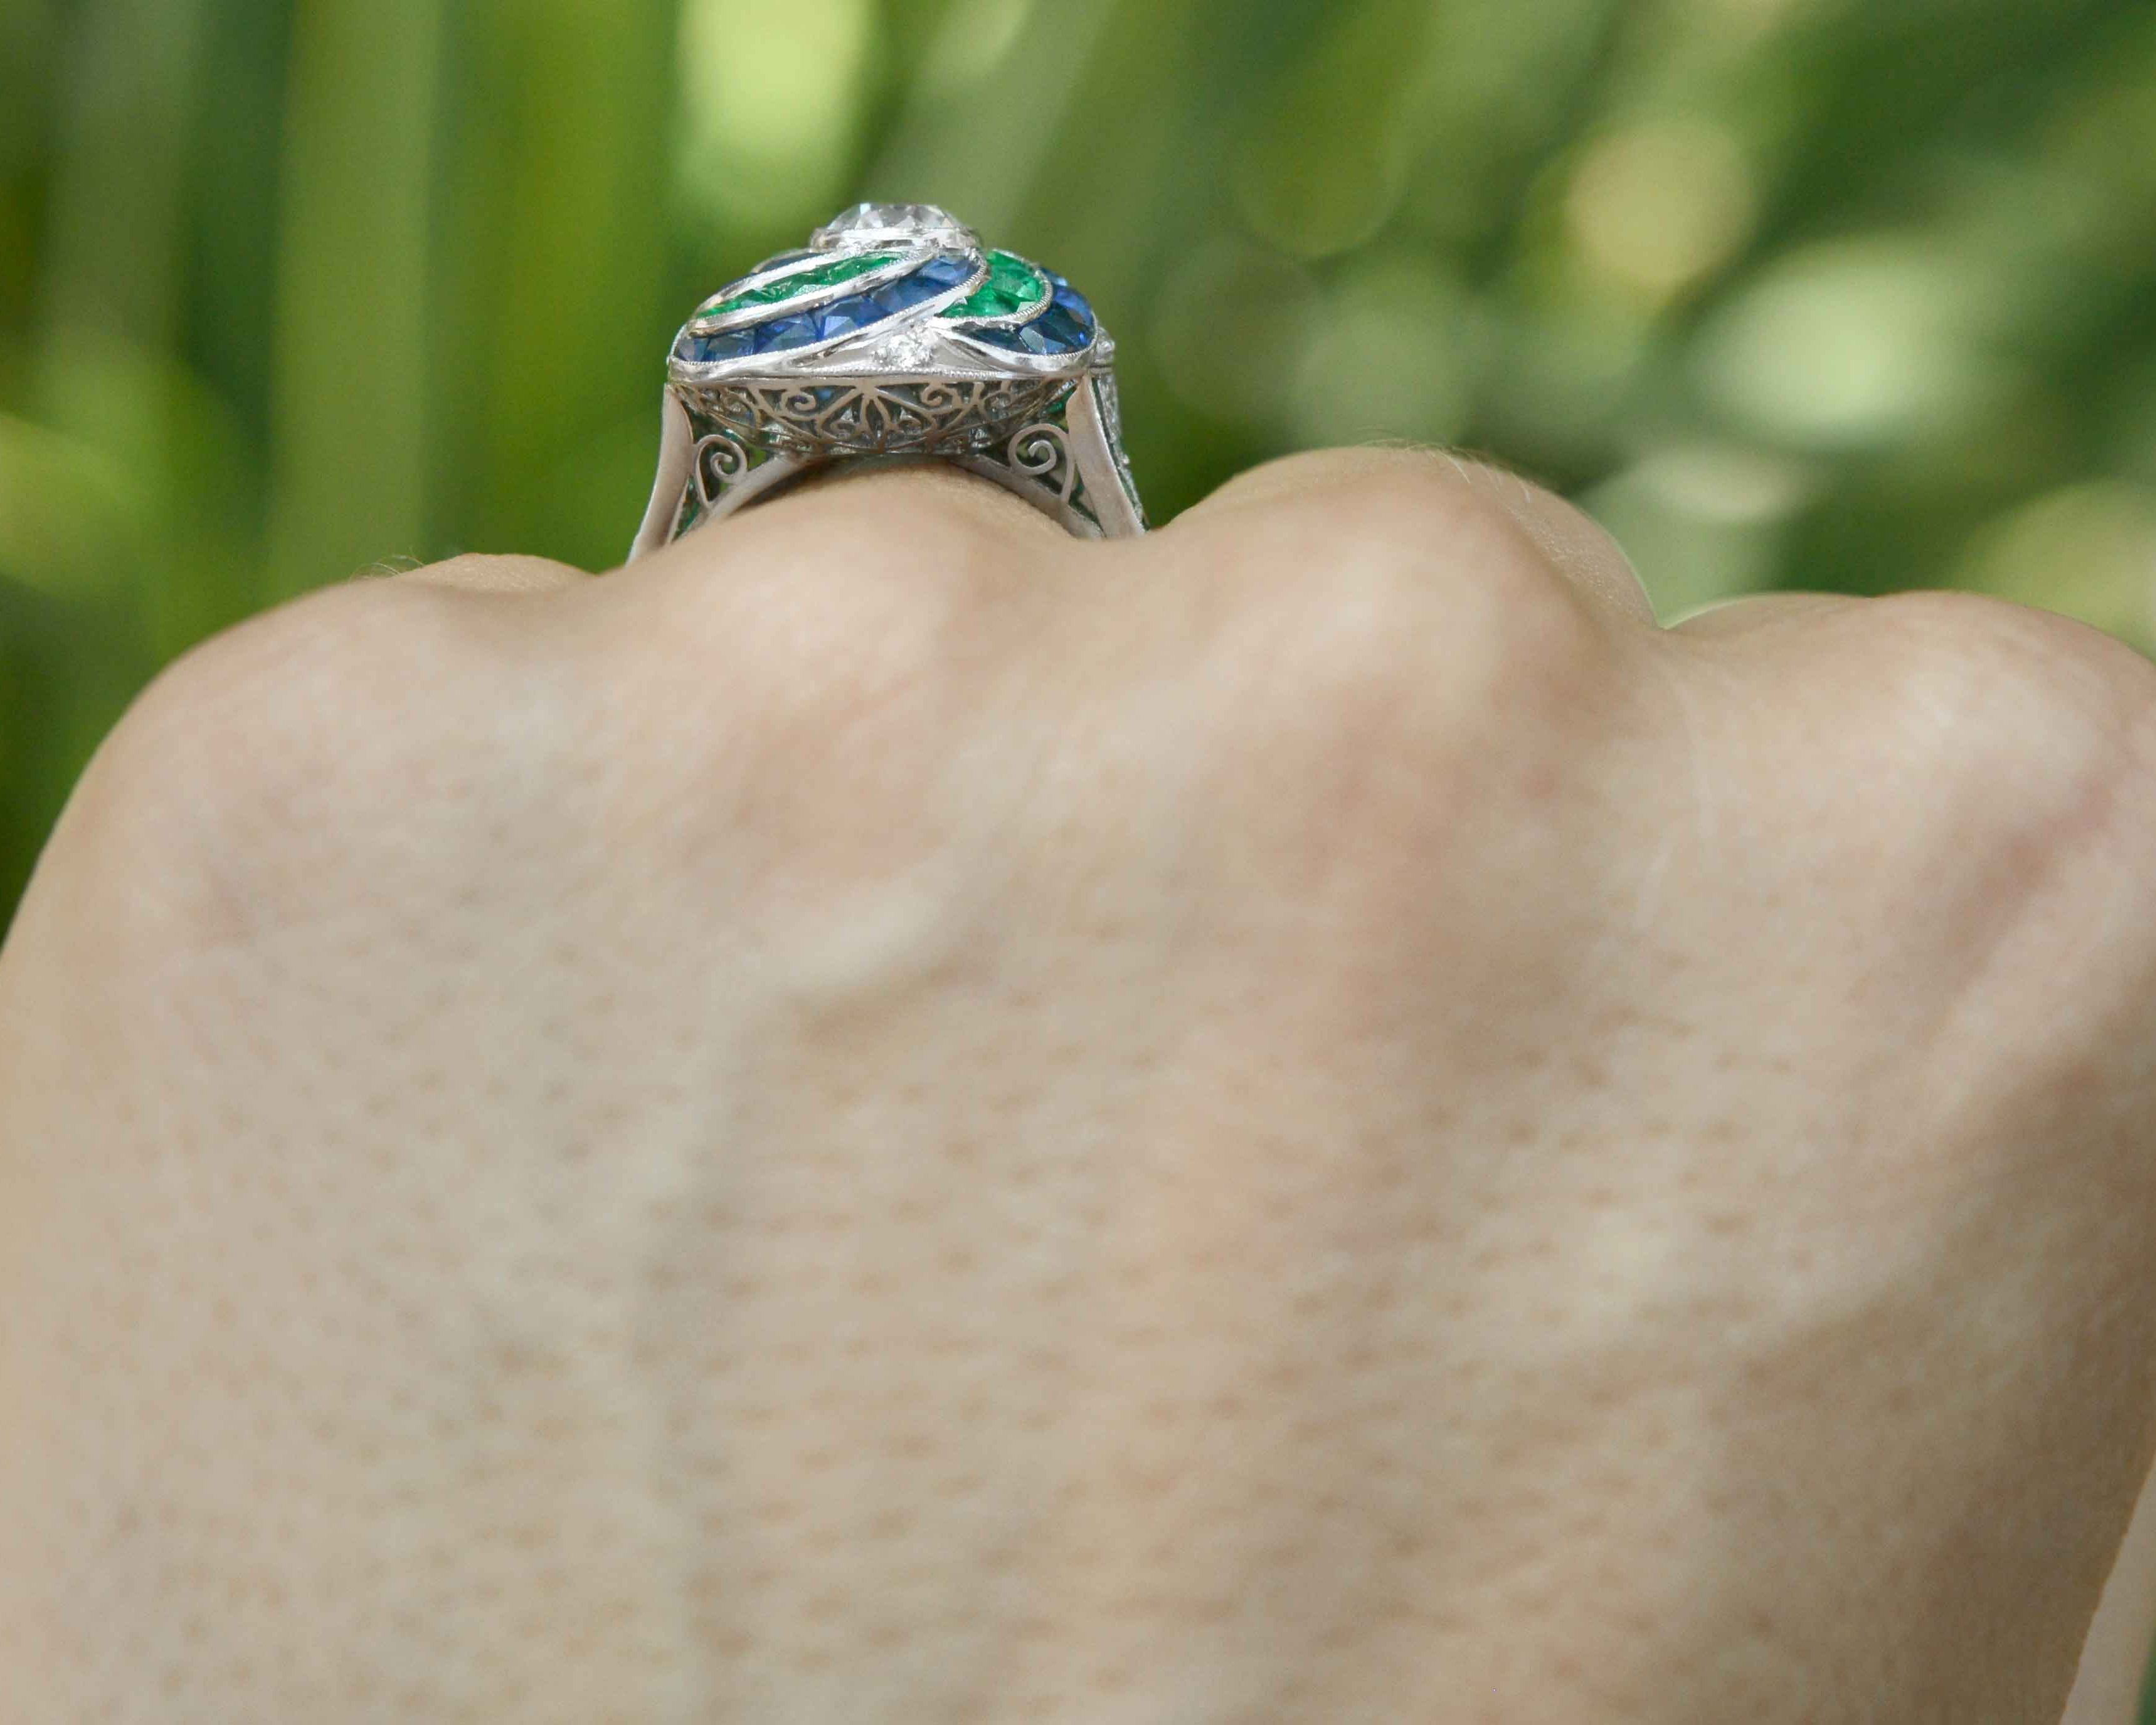 A unique one carat diamond platinum engagement ring with a filigree undergallery.